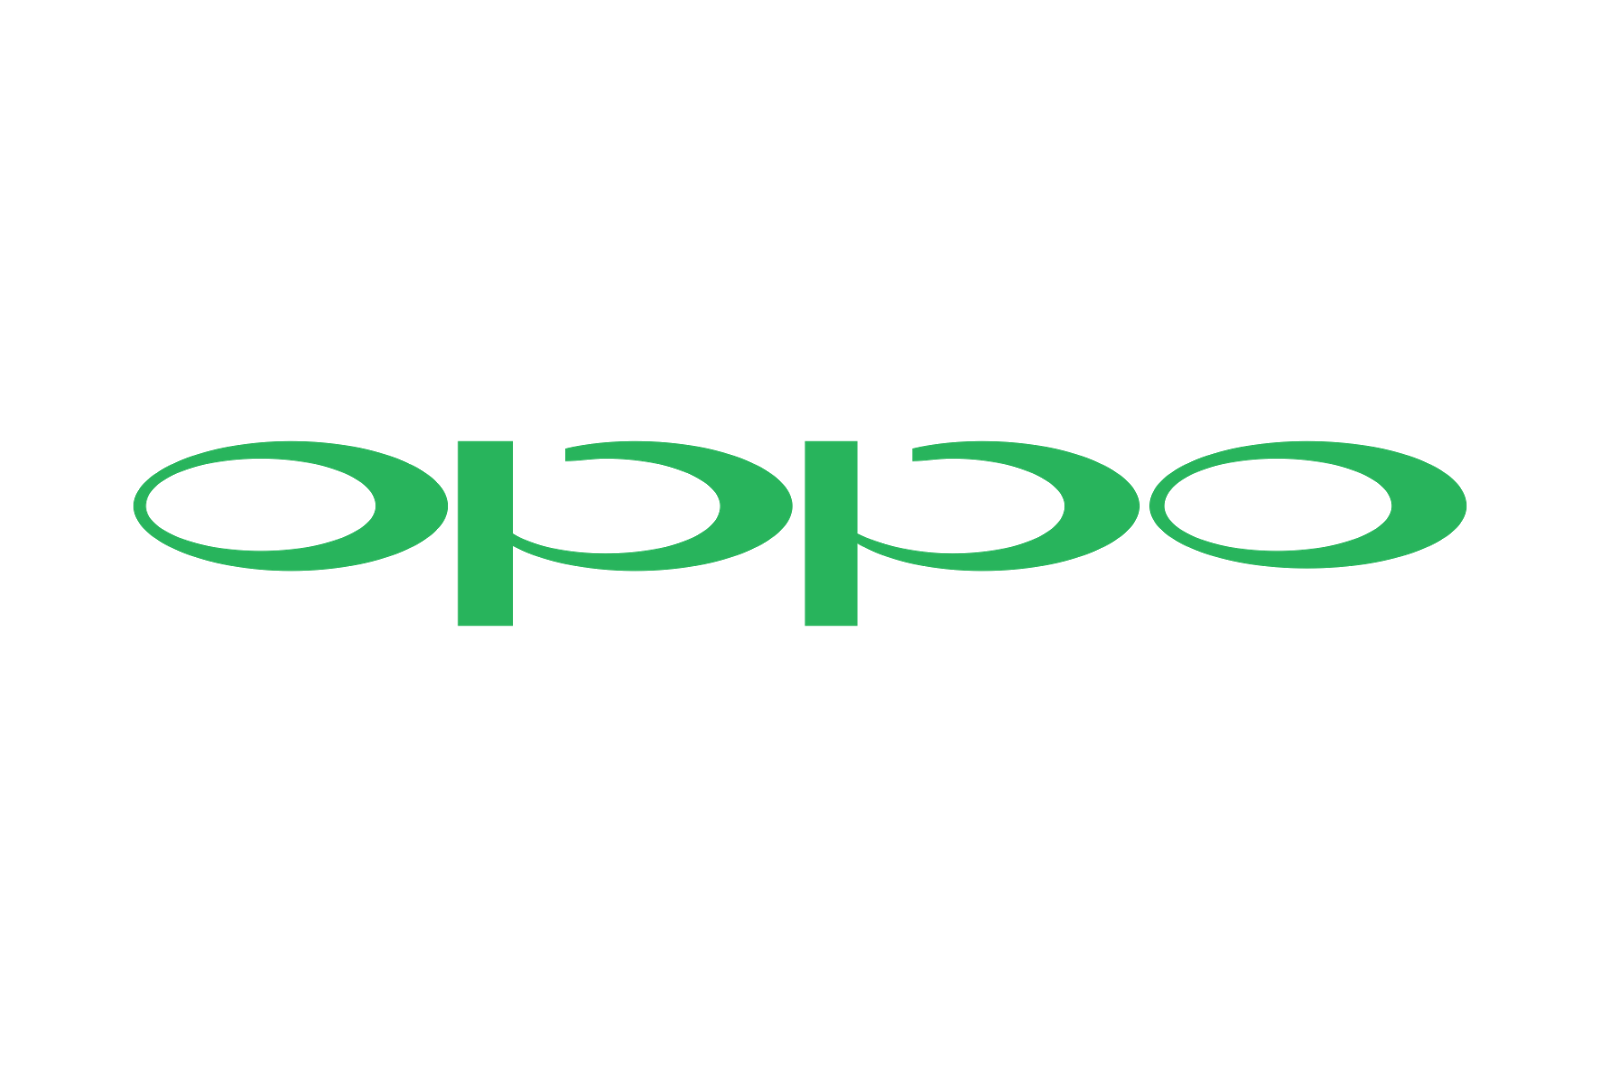 Oppo Electronics Logo photo -